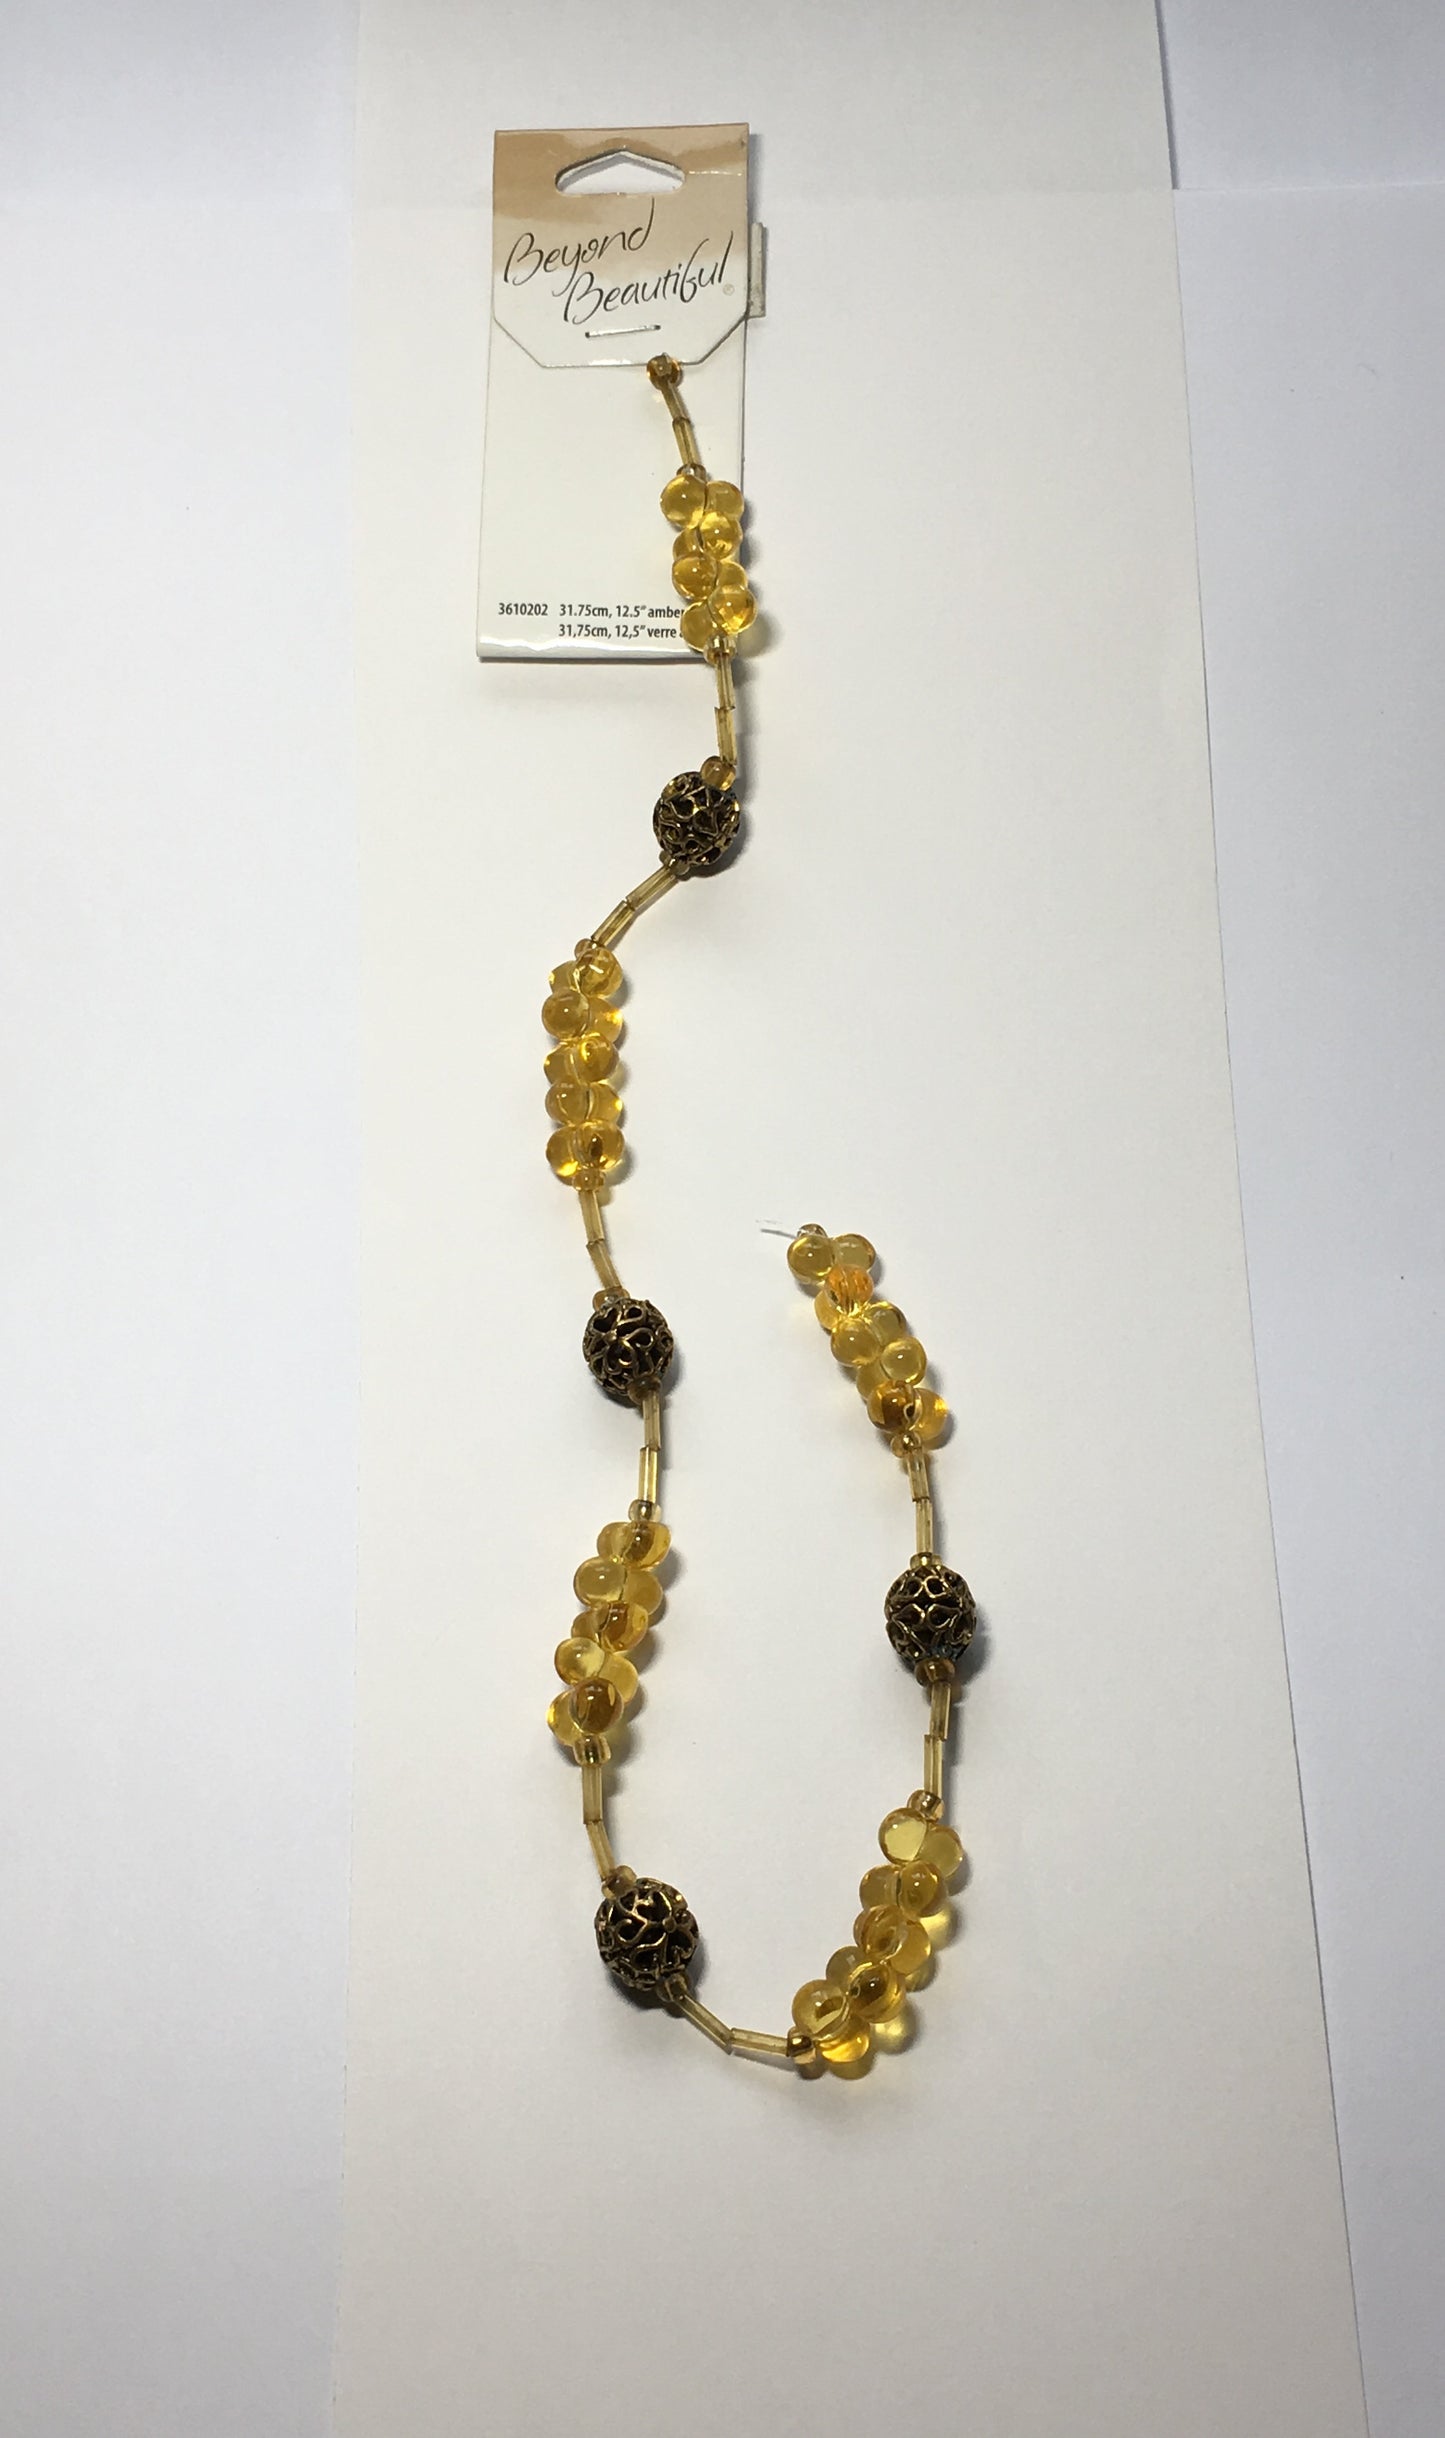 Beyond Beautiful Amber Glass 10 x 6 mm Farfalle Beads (25) with Gold Filigree Heart Design 10 mm (4) Gold Metal Beads